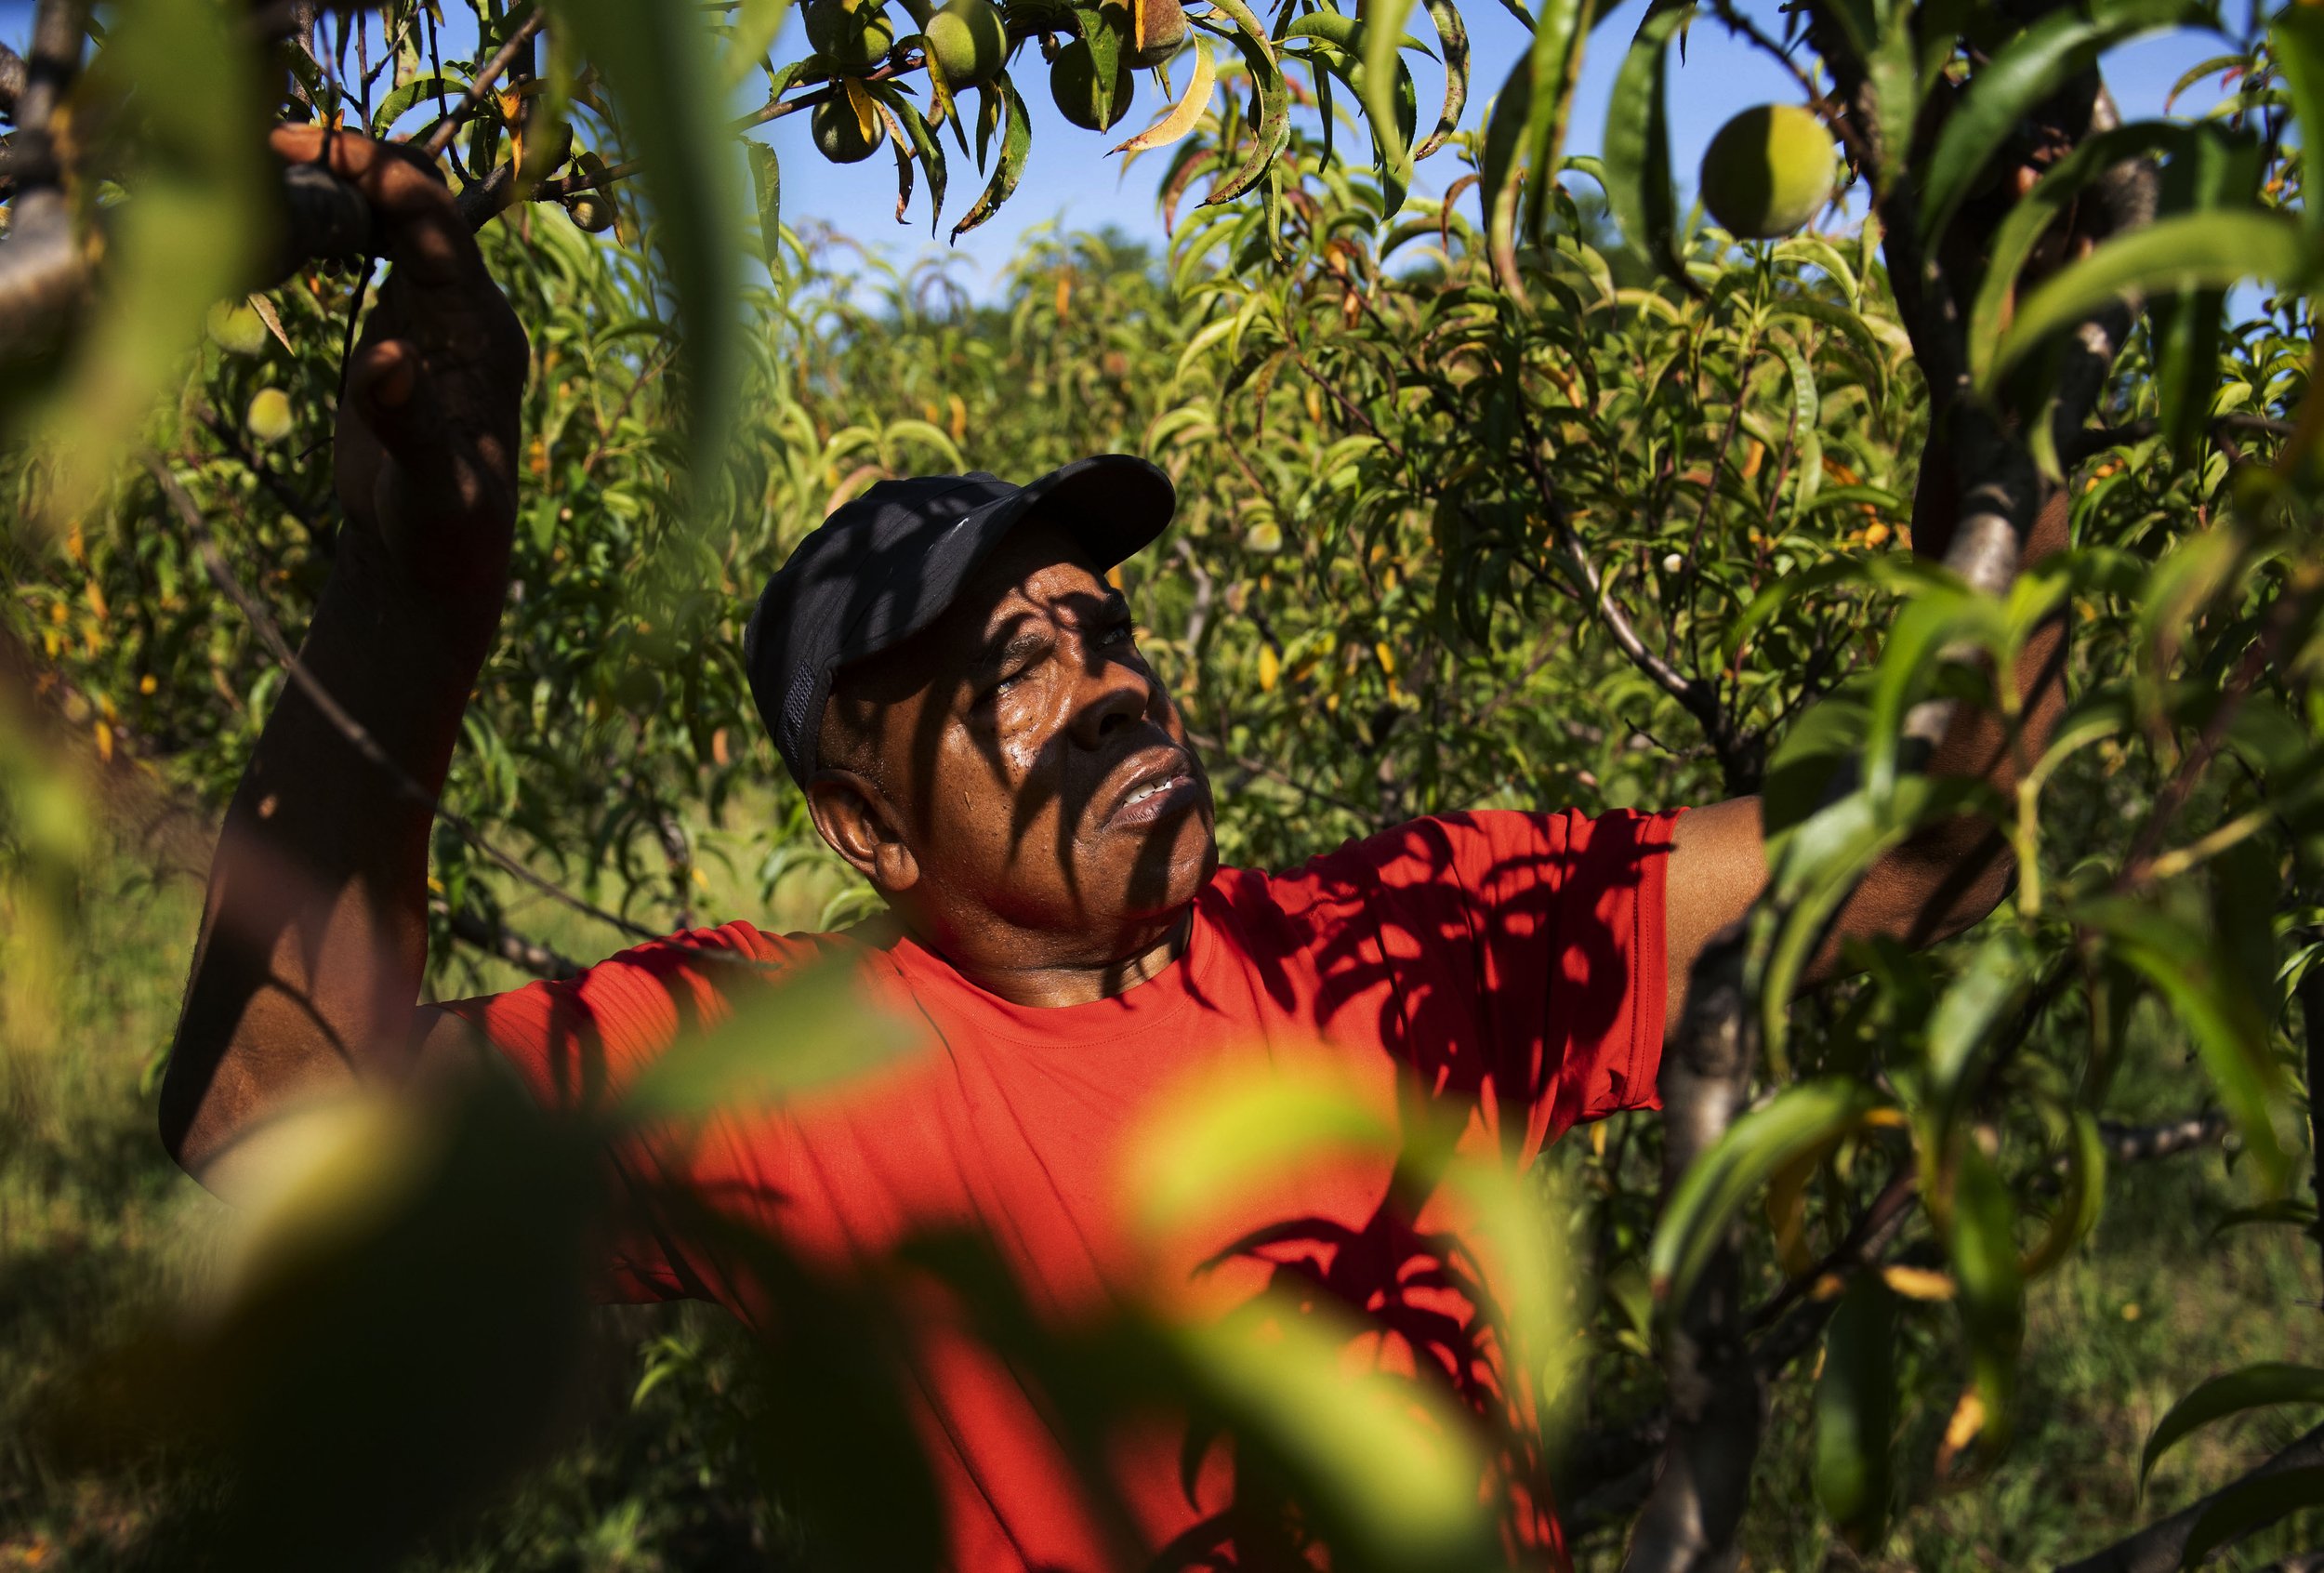  Robert Jackson looks through his peach trees on his farm in Lyman, Sunday, May 15, 2022.  